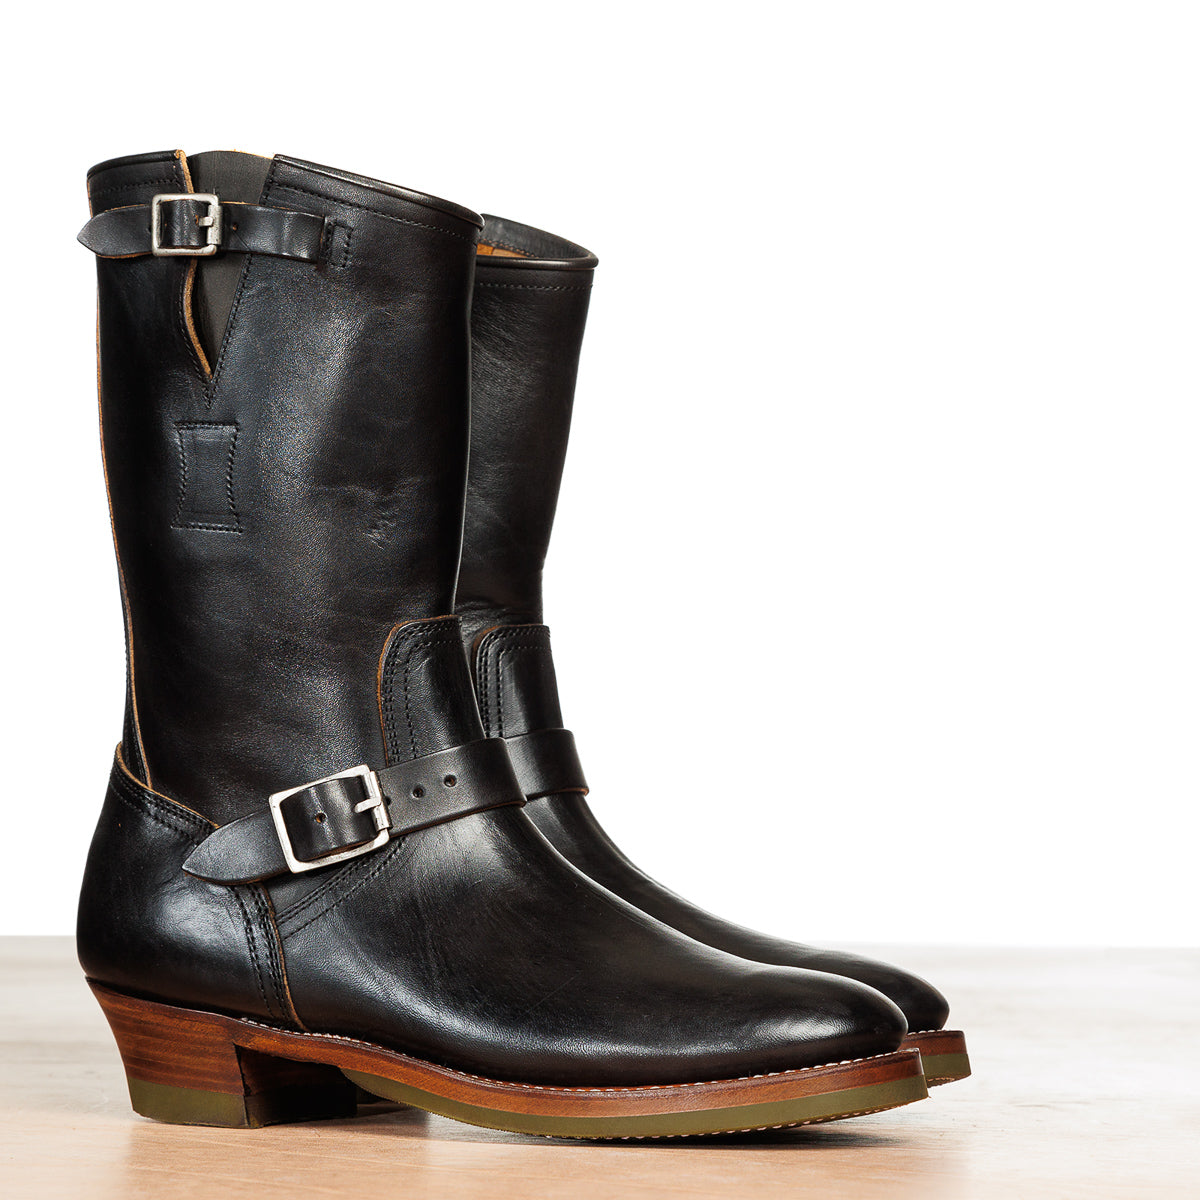 Clinch Boots – Standard & Strange